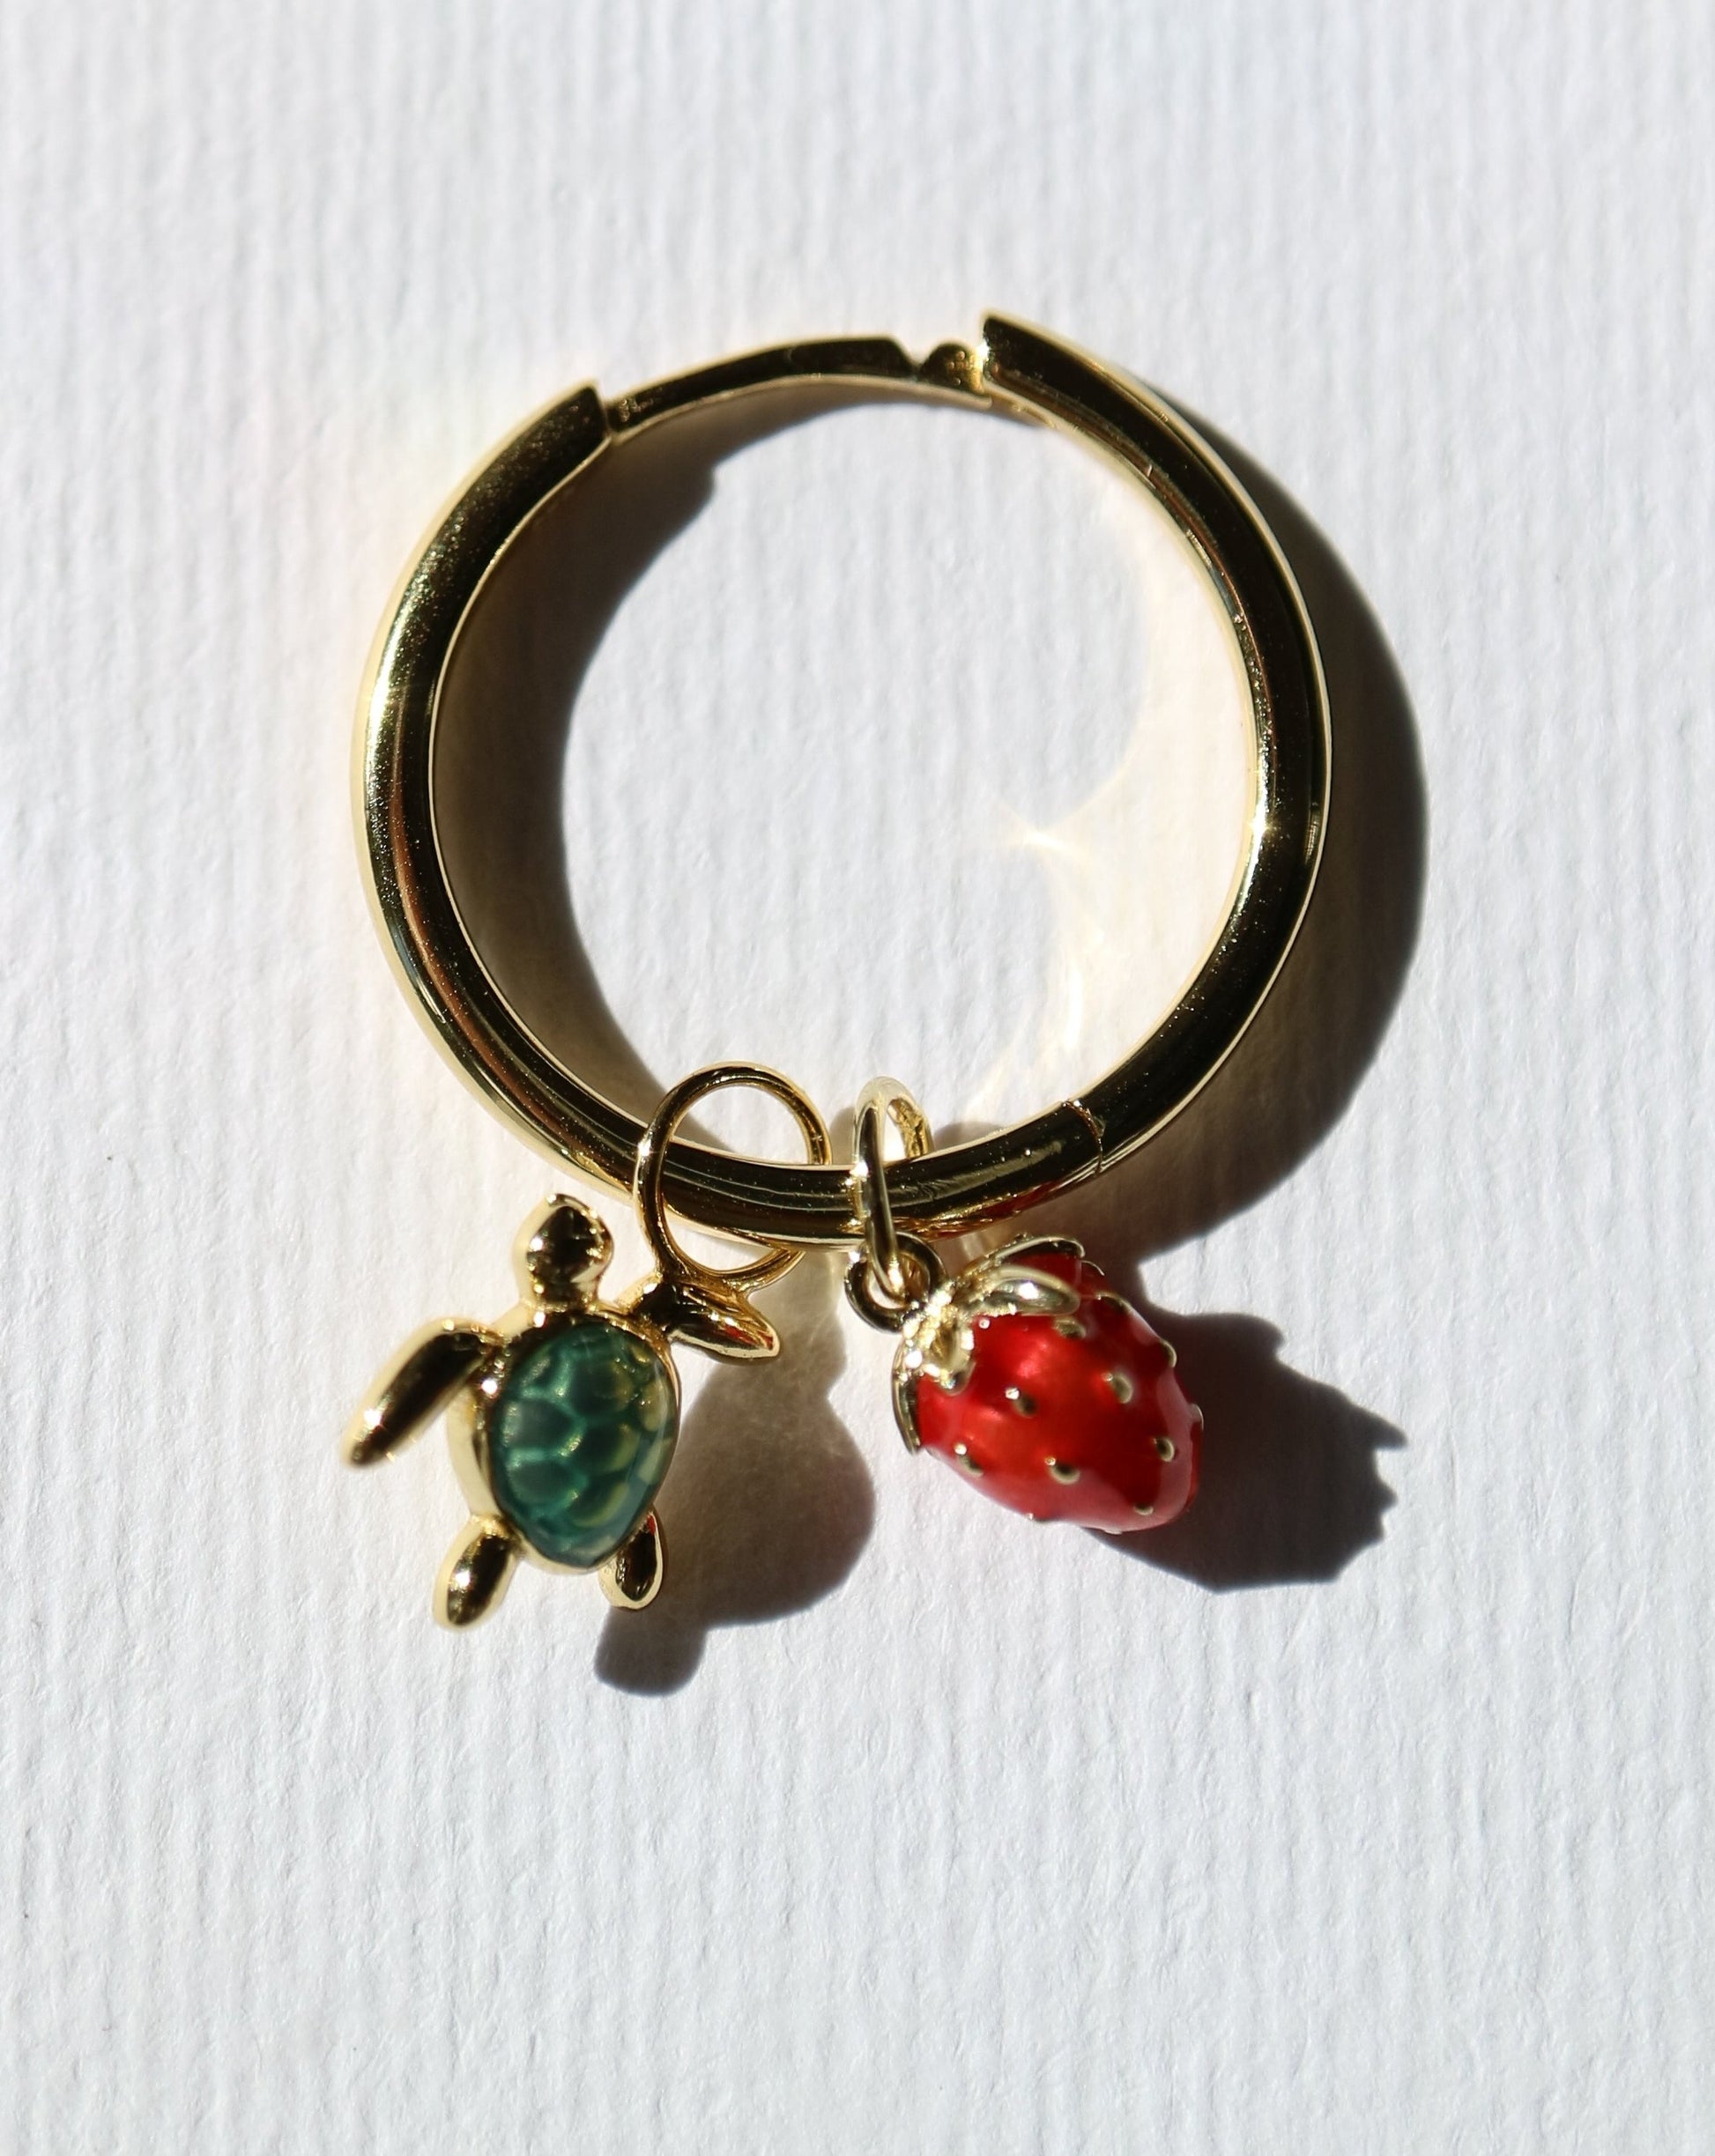 Turtle charm for jewelry hoop earrings